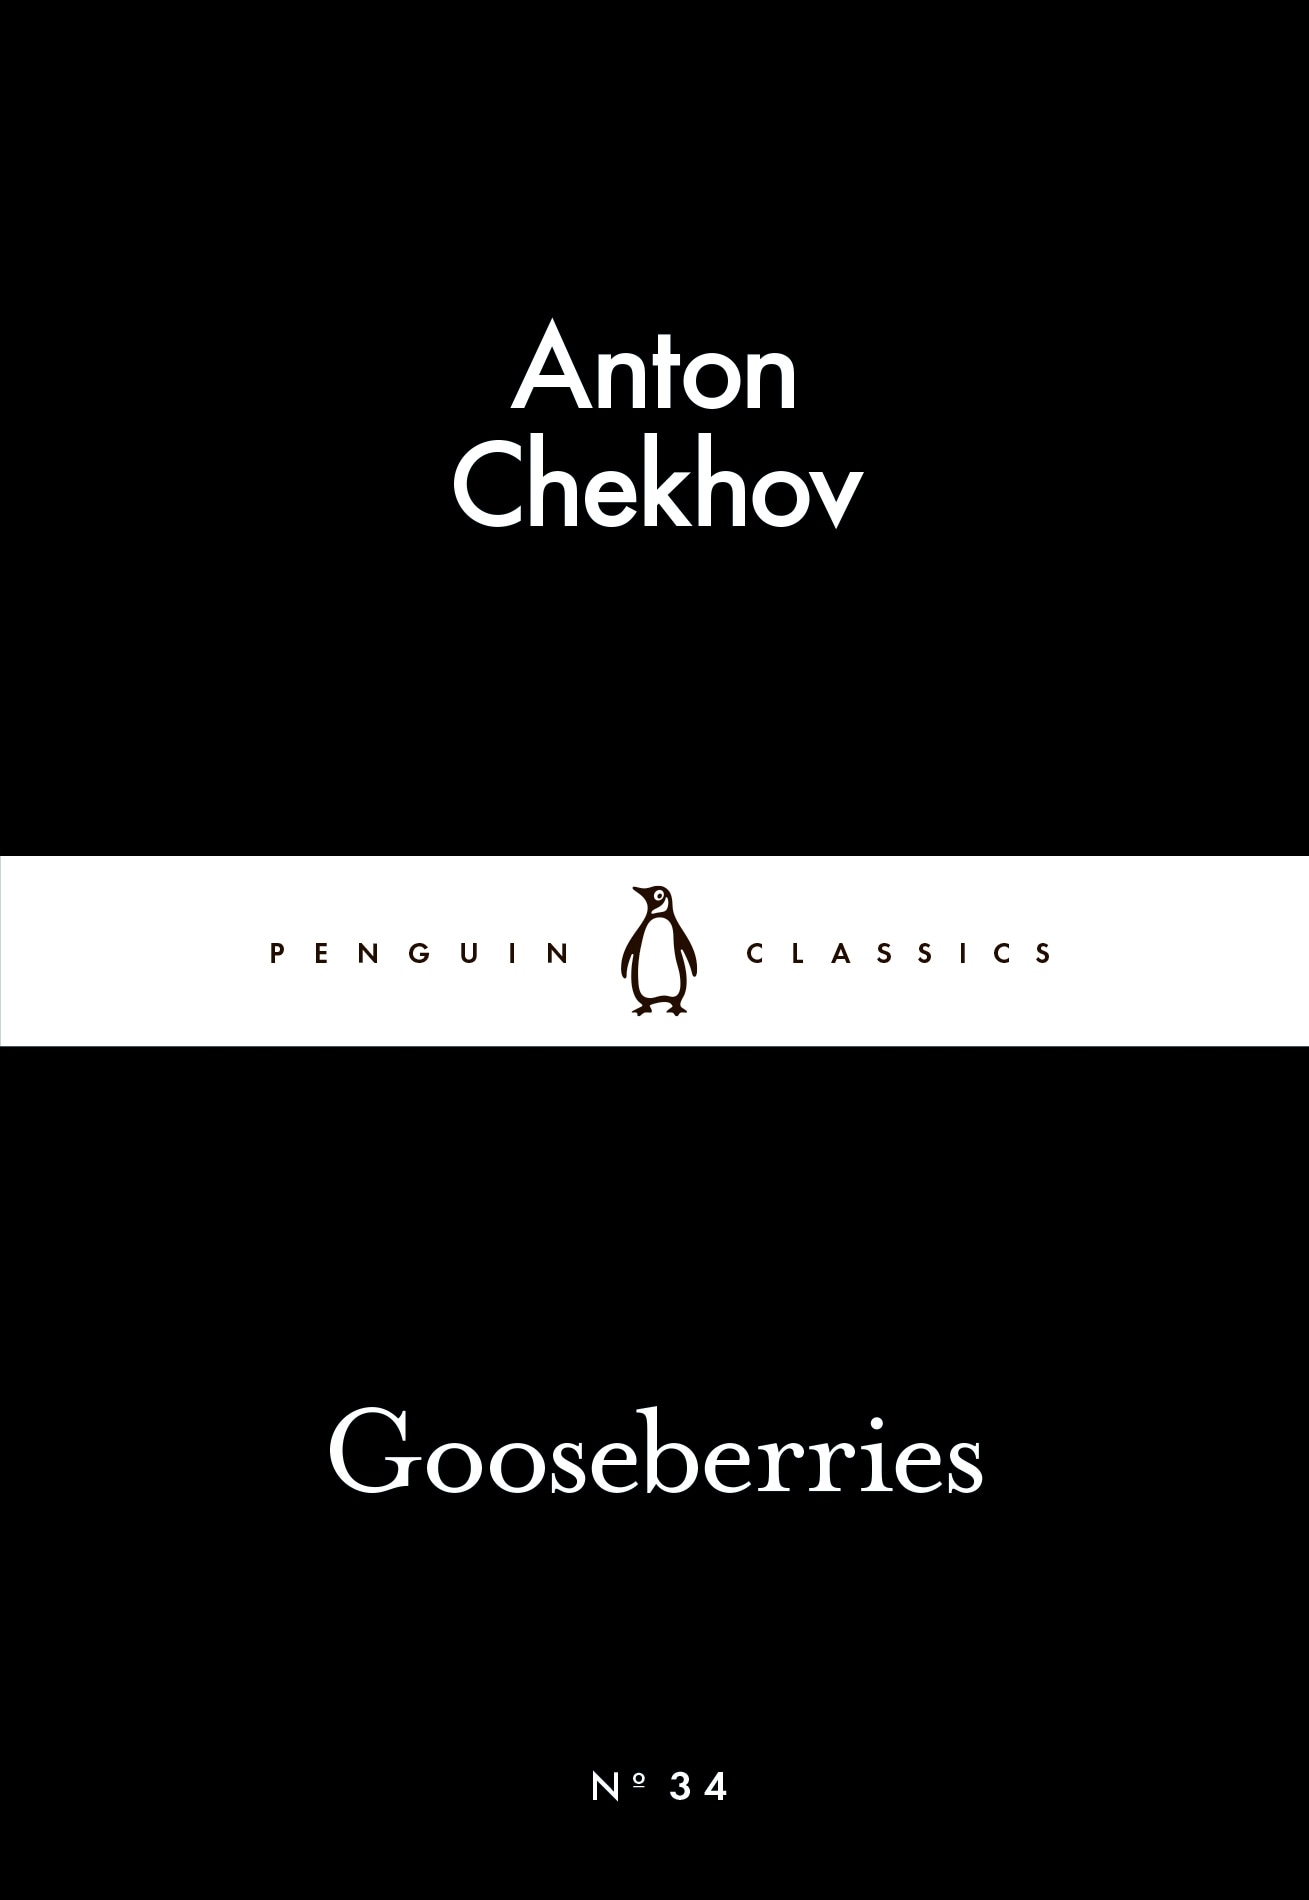 Book “Gooseberries” by Anton Chekhov — February 26, 2015